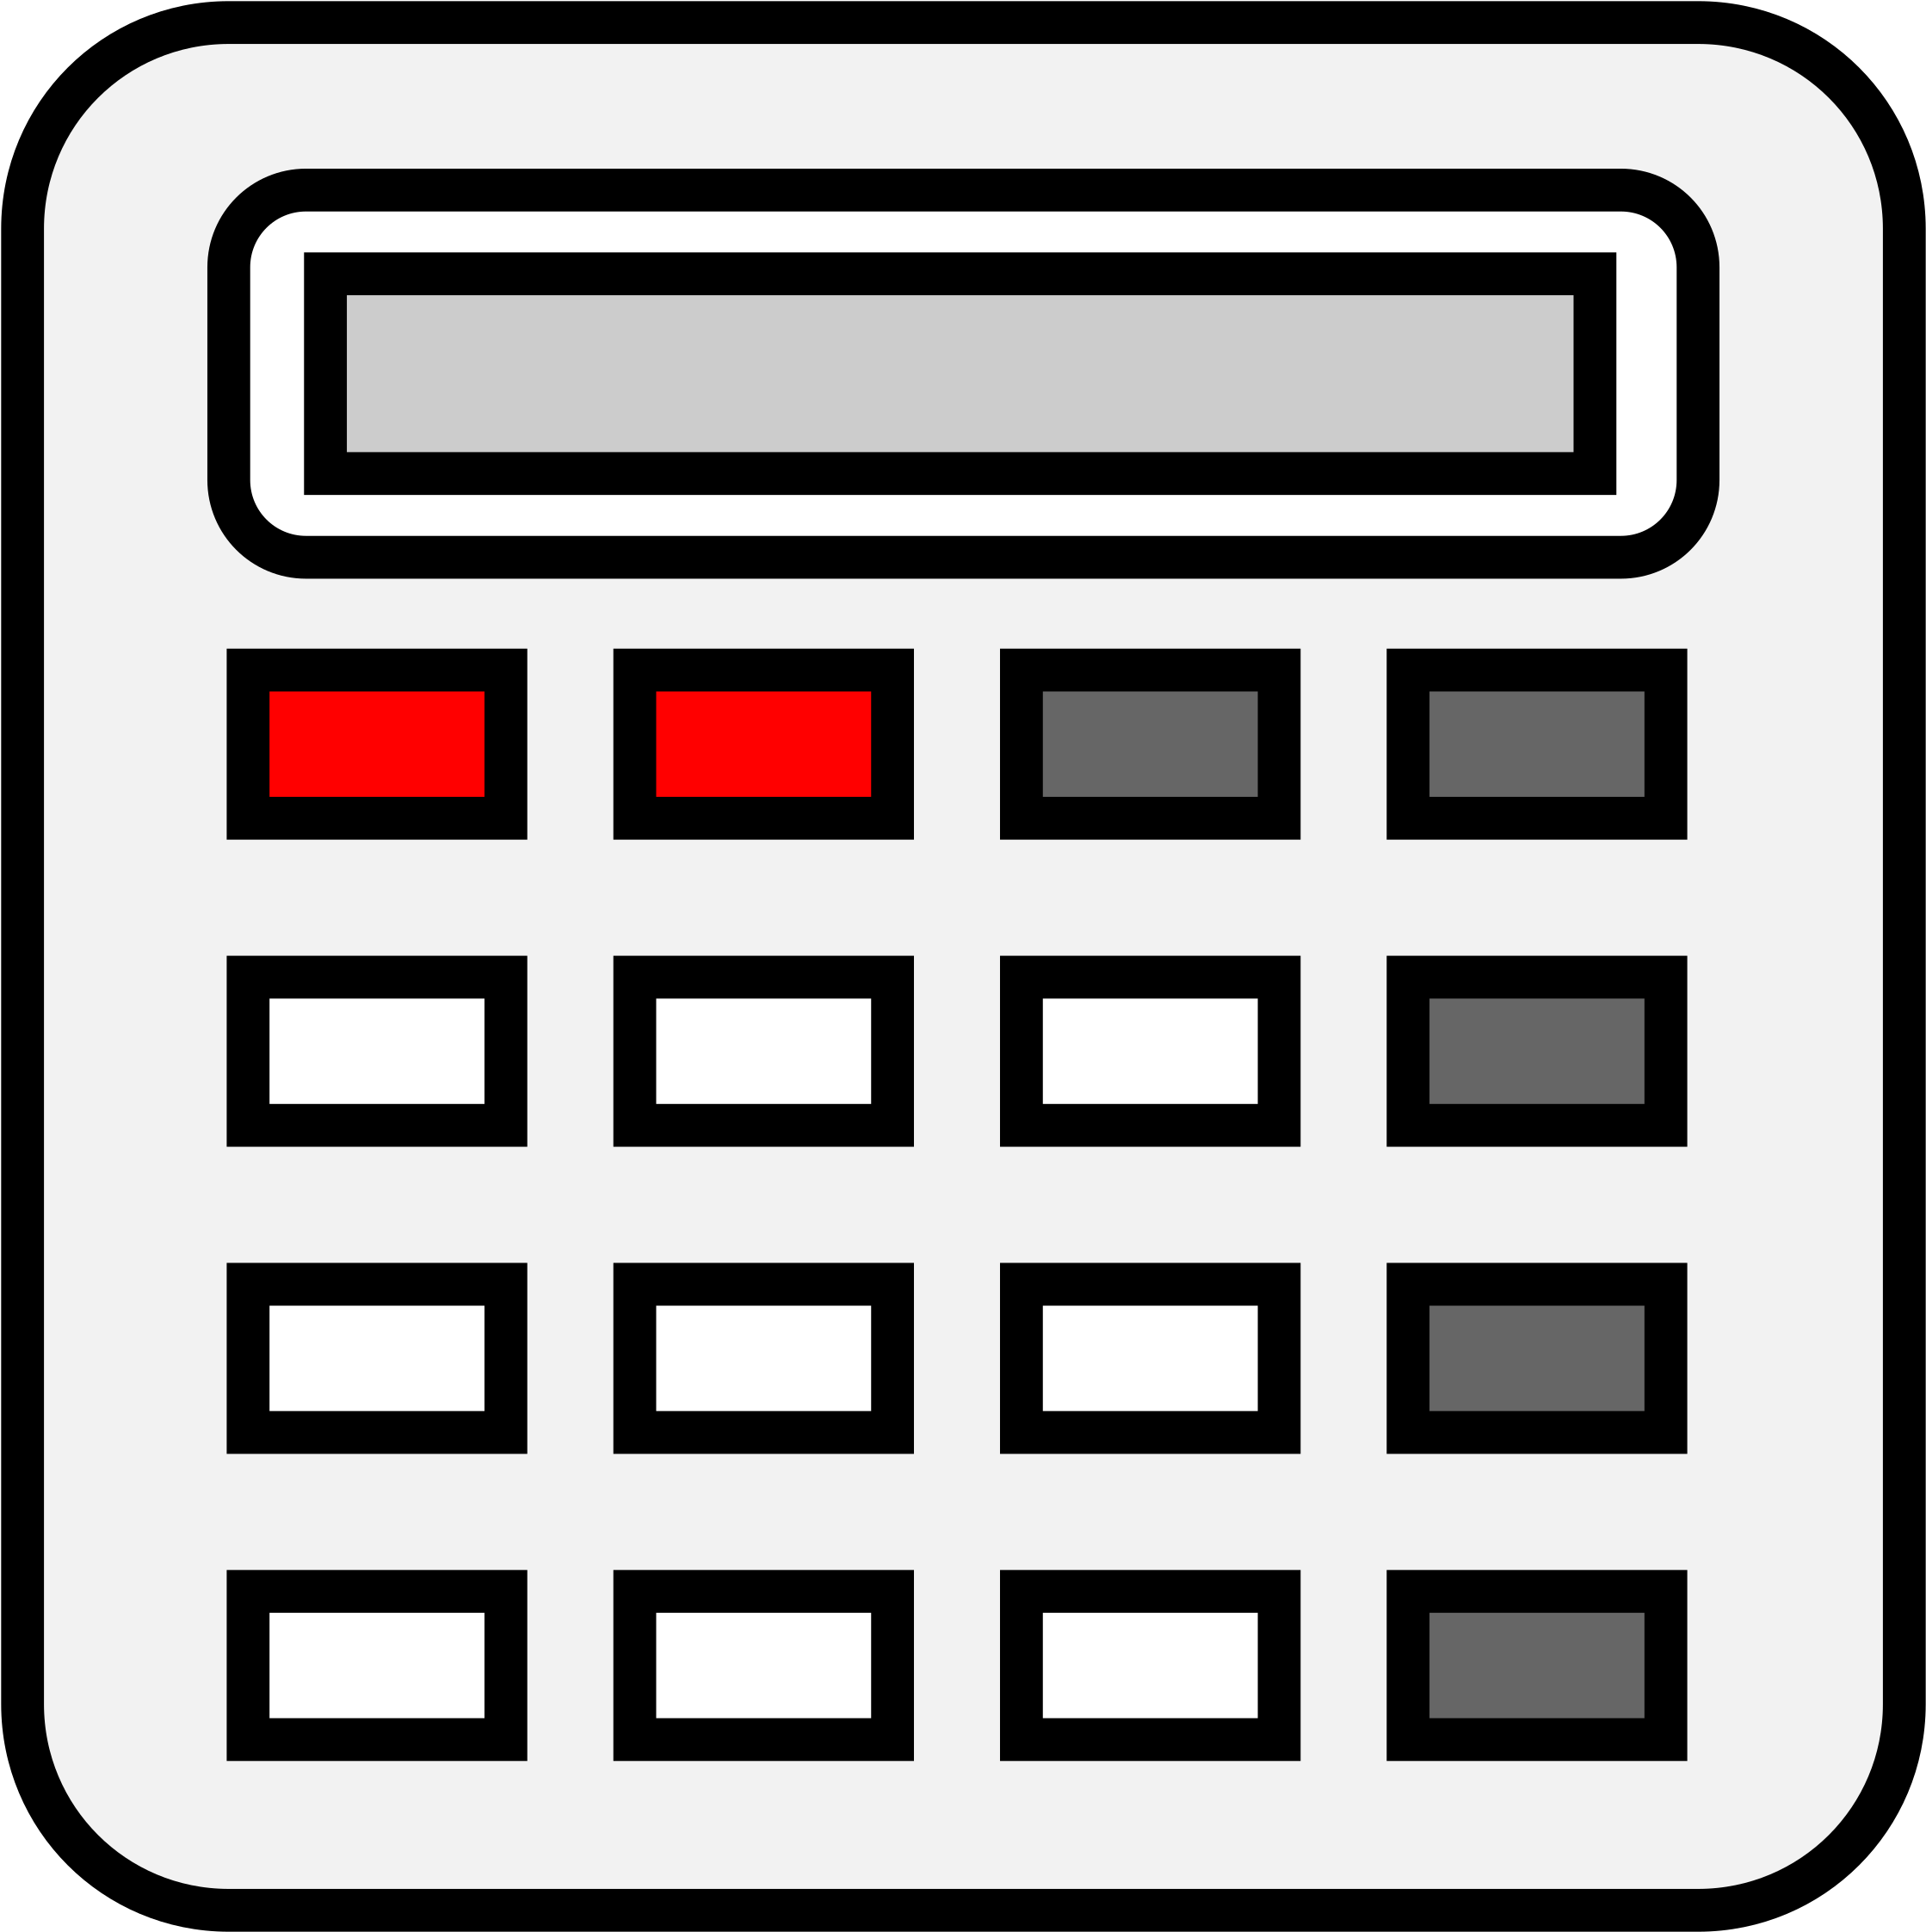 Simple Graphic Calculator